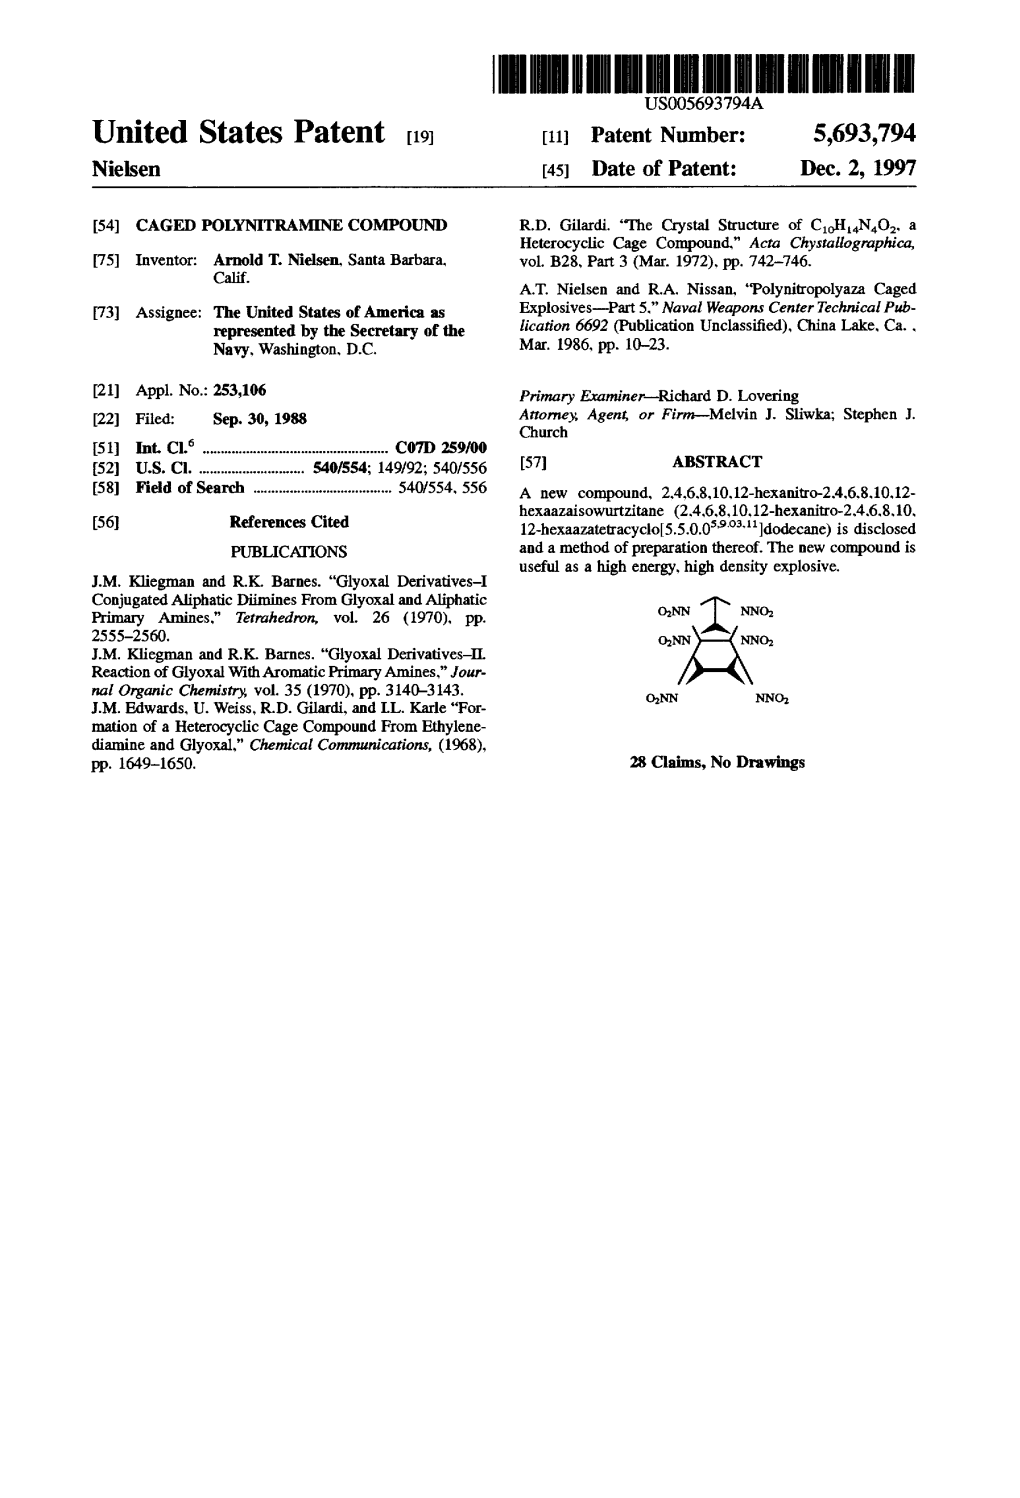 United States Patent (19) 11 Patent Number: 5,693,794 Nielsen 45 Date of Patent: Dec